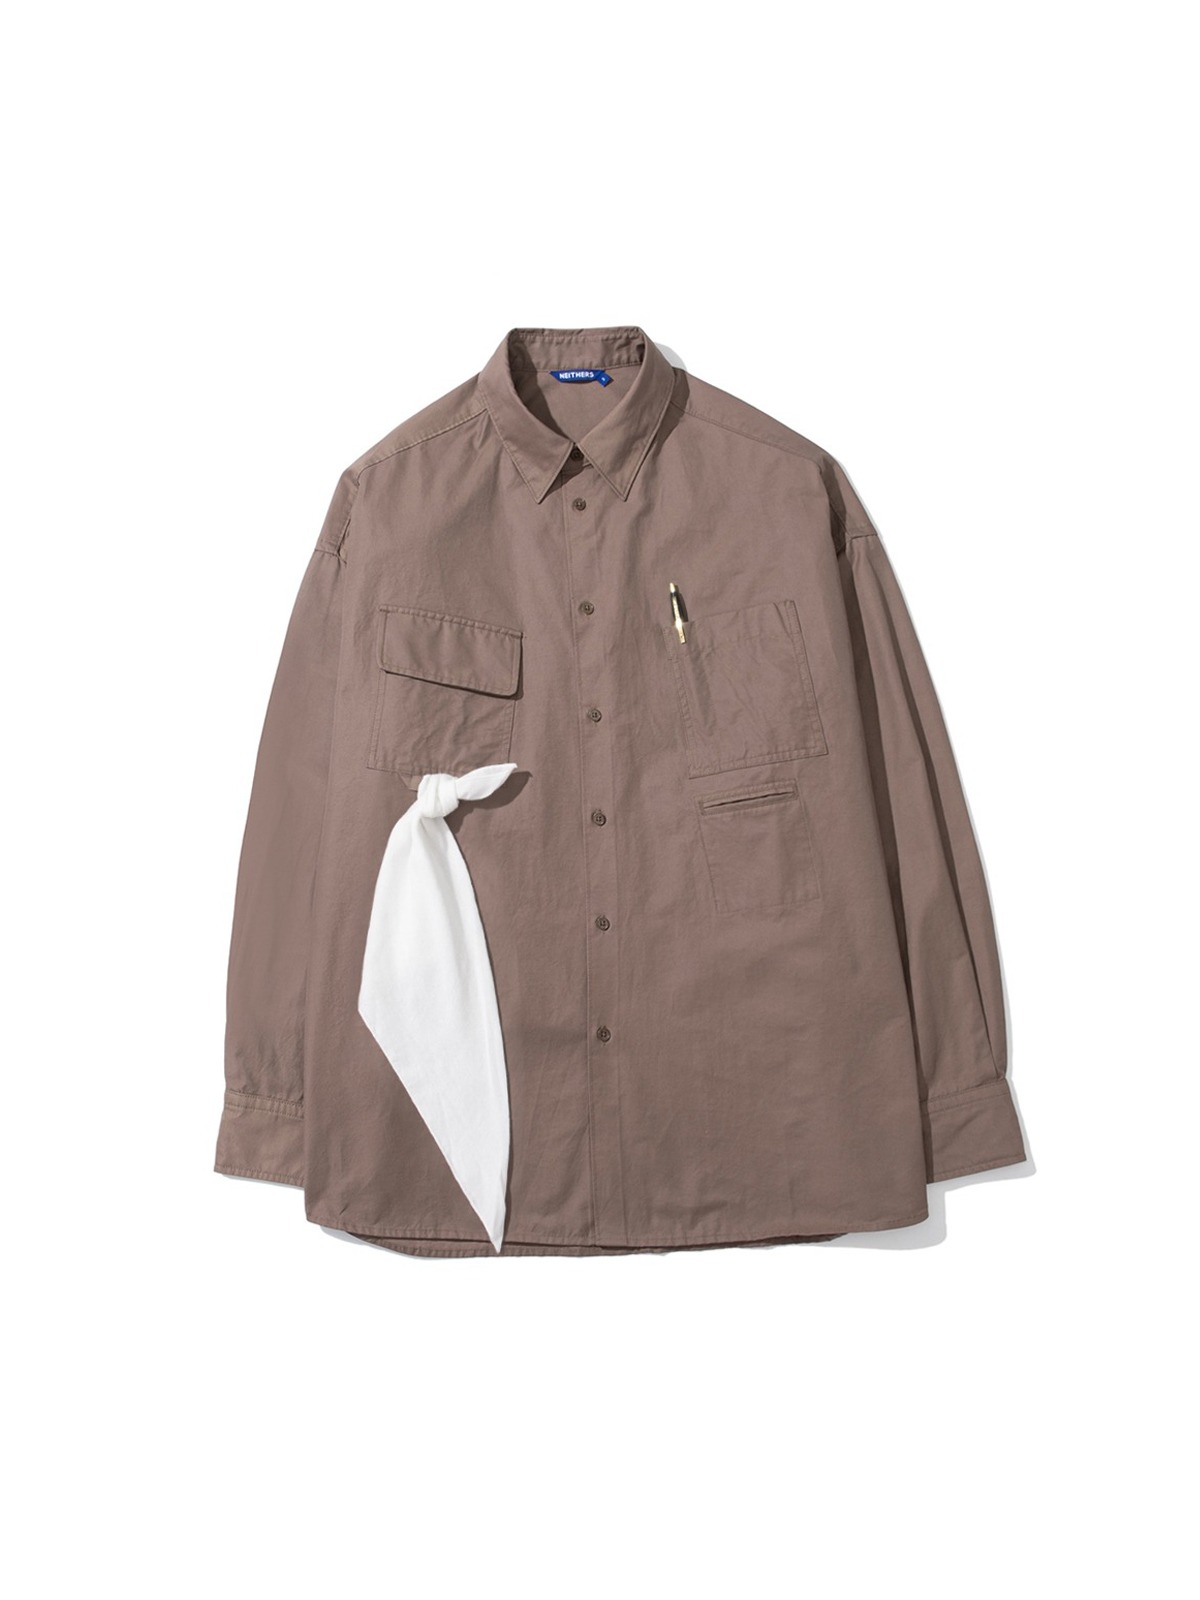 Barista Shirt (Brown)